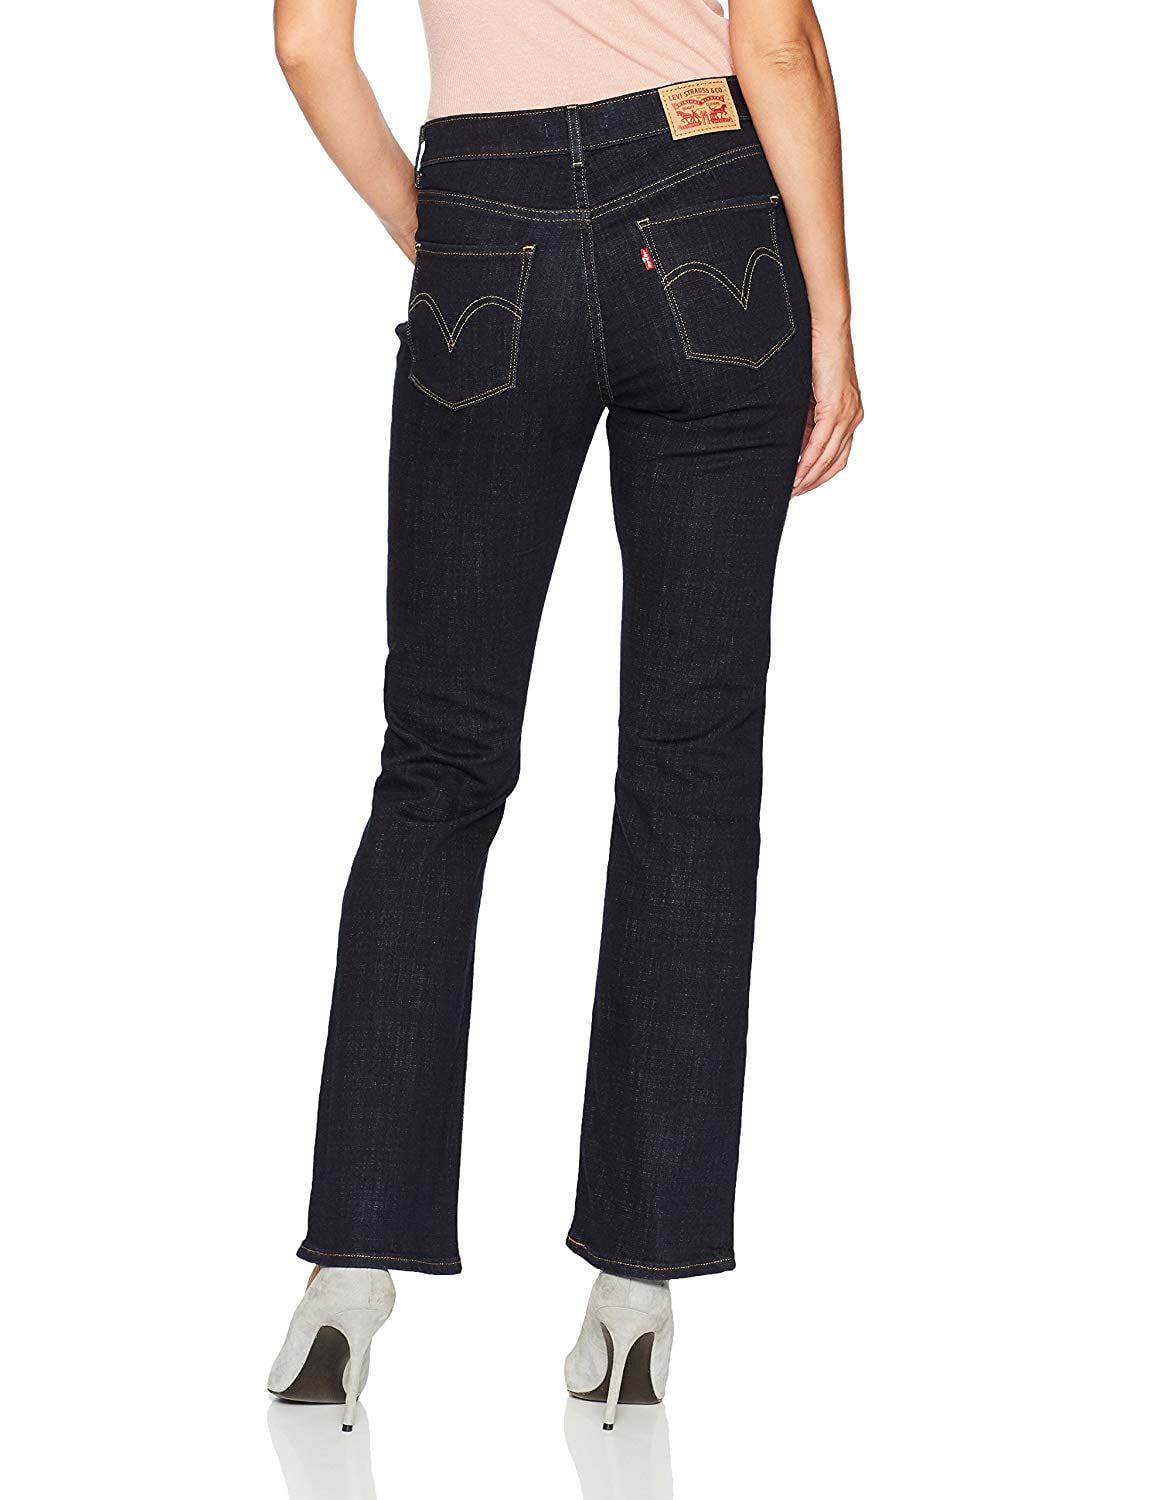 Levi's Women's Classic Bootcut Jeans, Island Rinse,, Island Rinse, Size 30  Long 